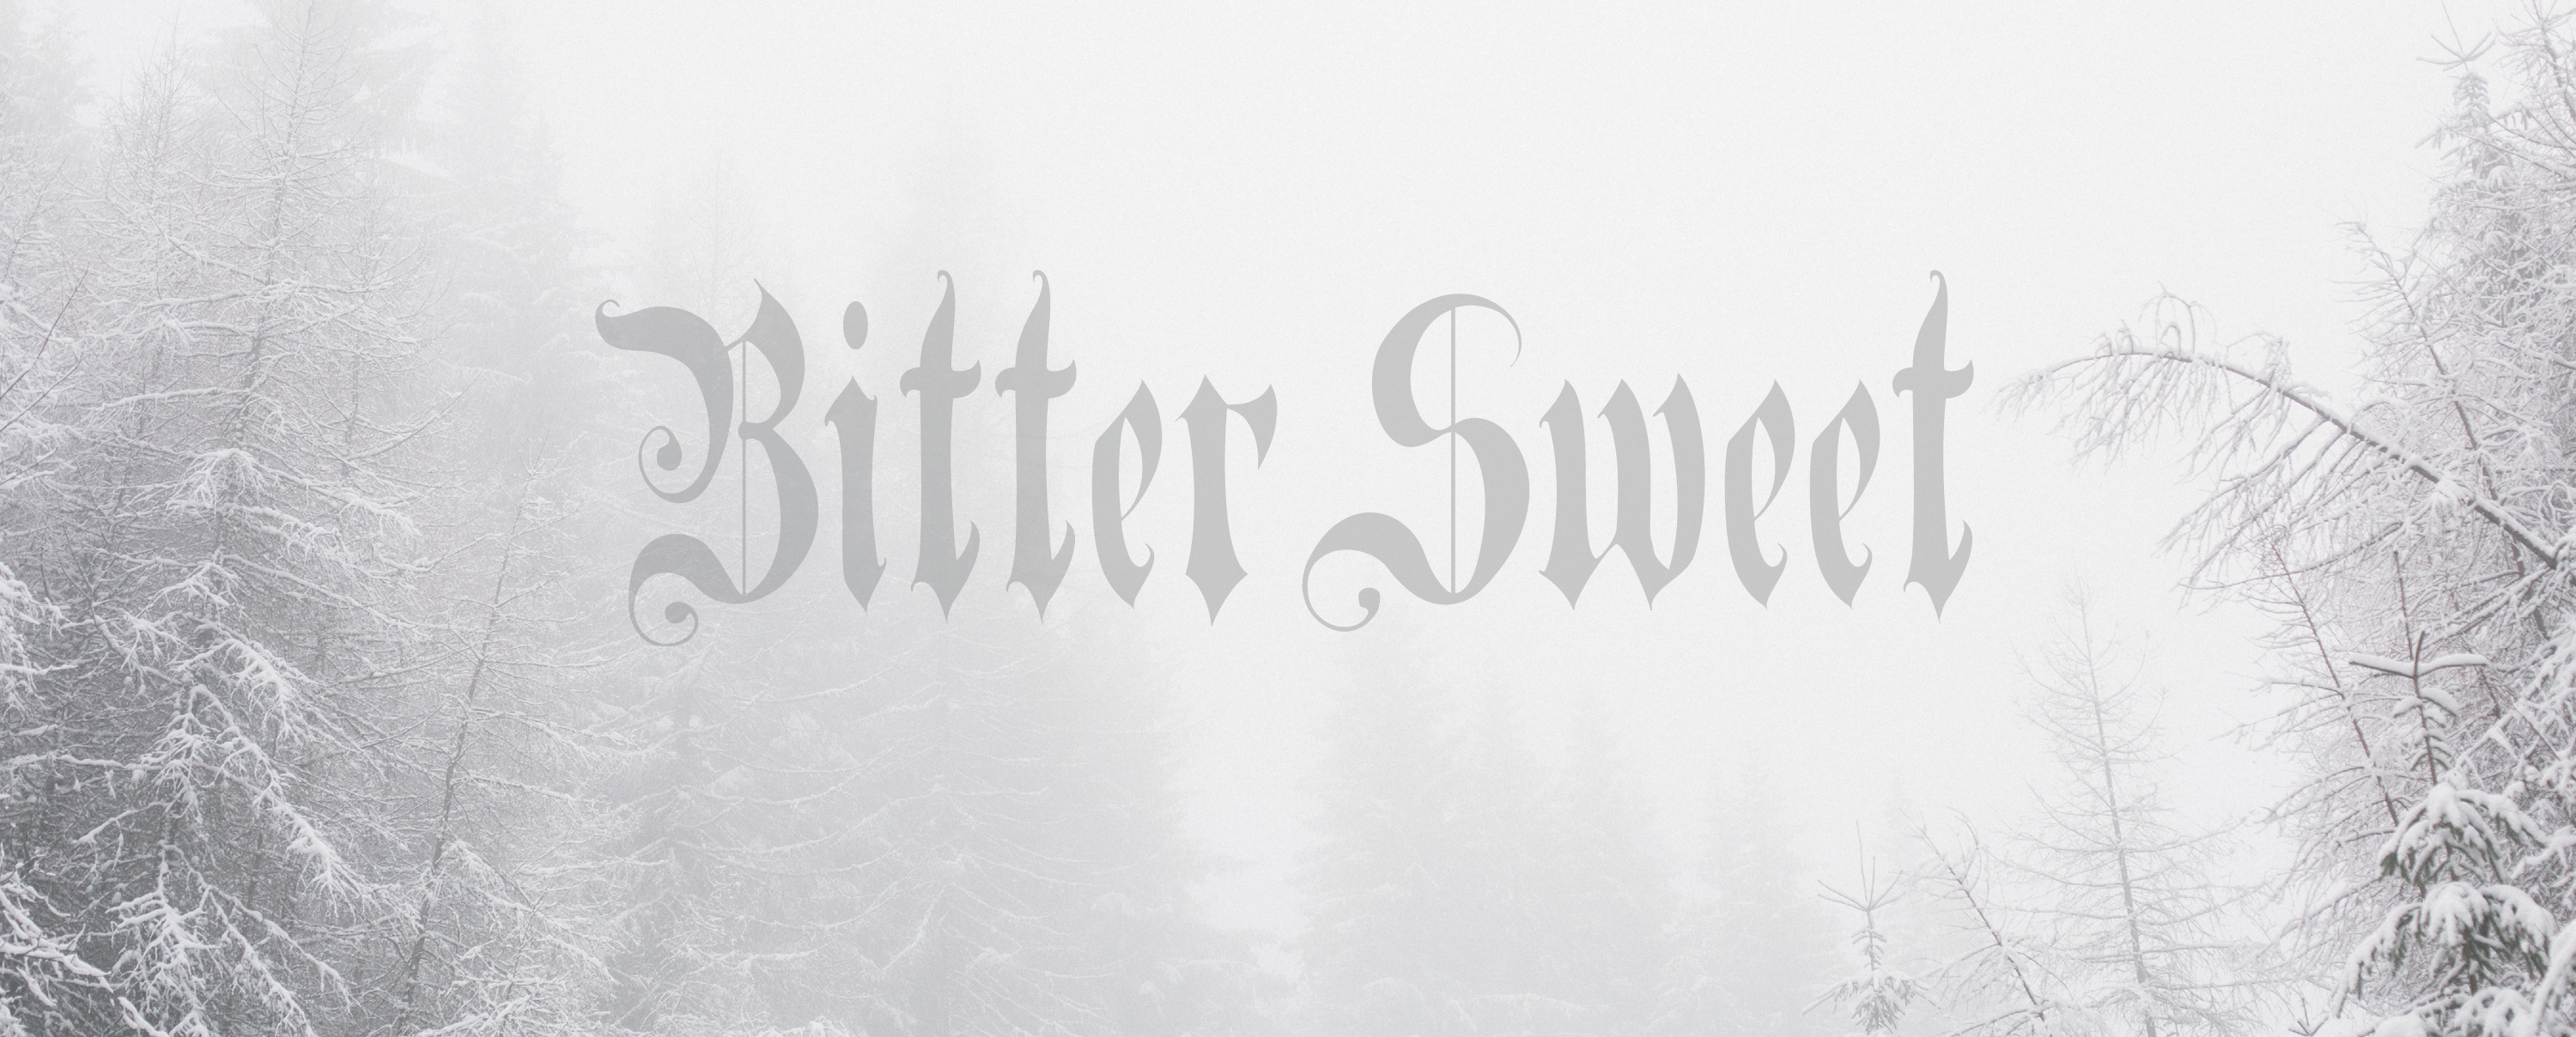 BITTERSWEET banner